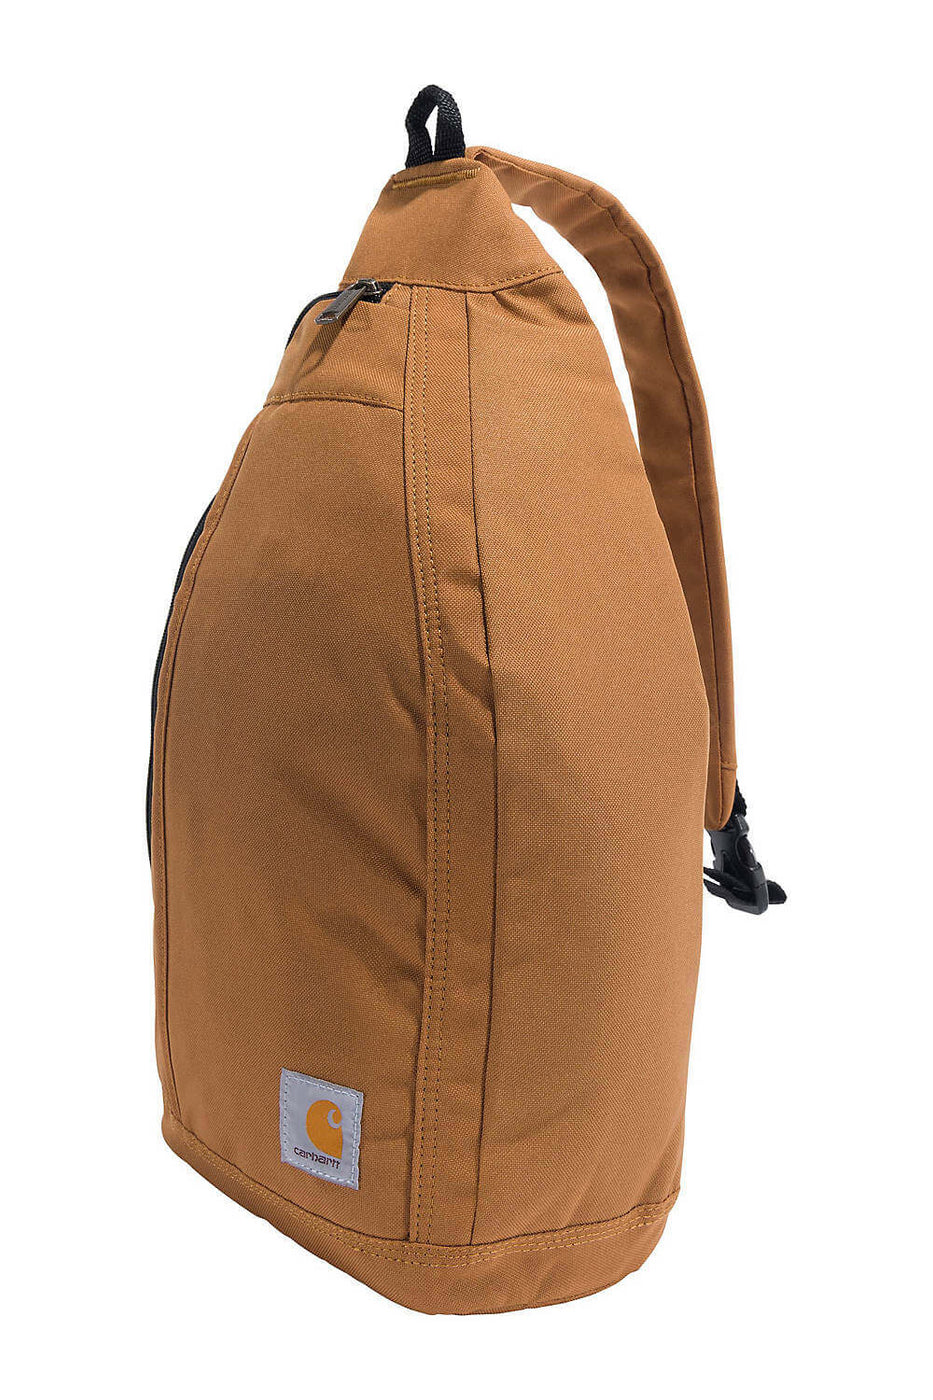 Carhartt Zip, Durable, Adjustable Crossbody Bag with Zipper Closure, Brown,  One Size